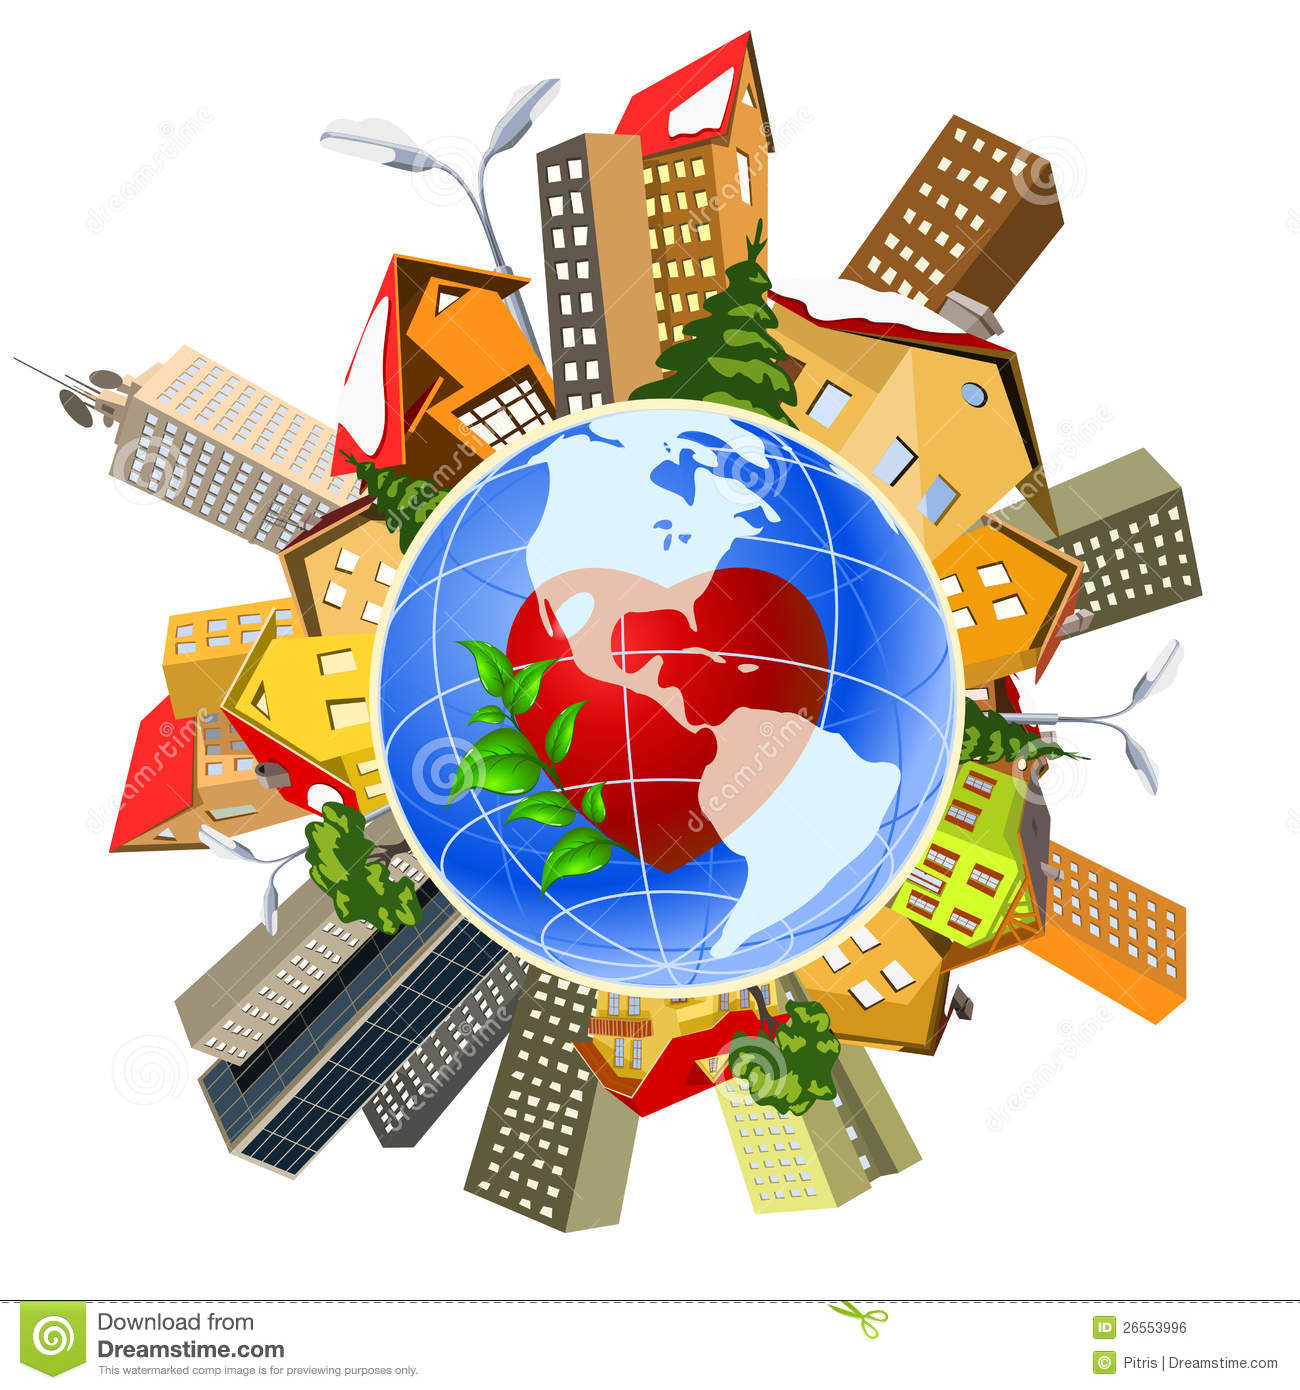 World Population Human Impact Royalty Free Stock Image   Image    